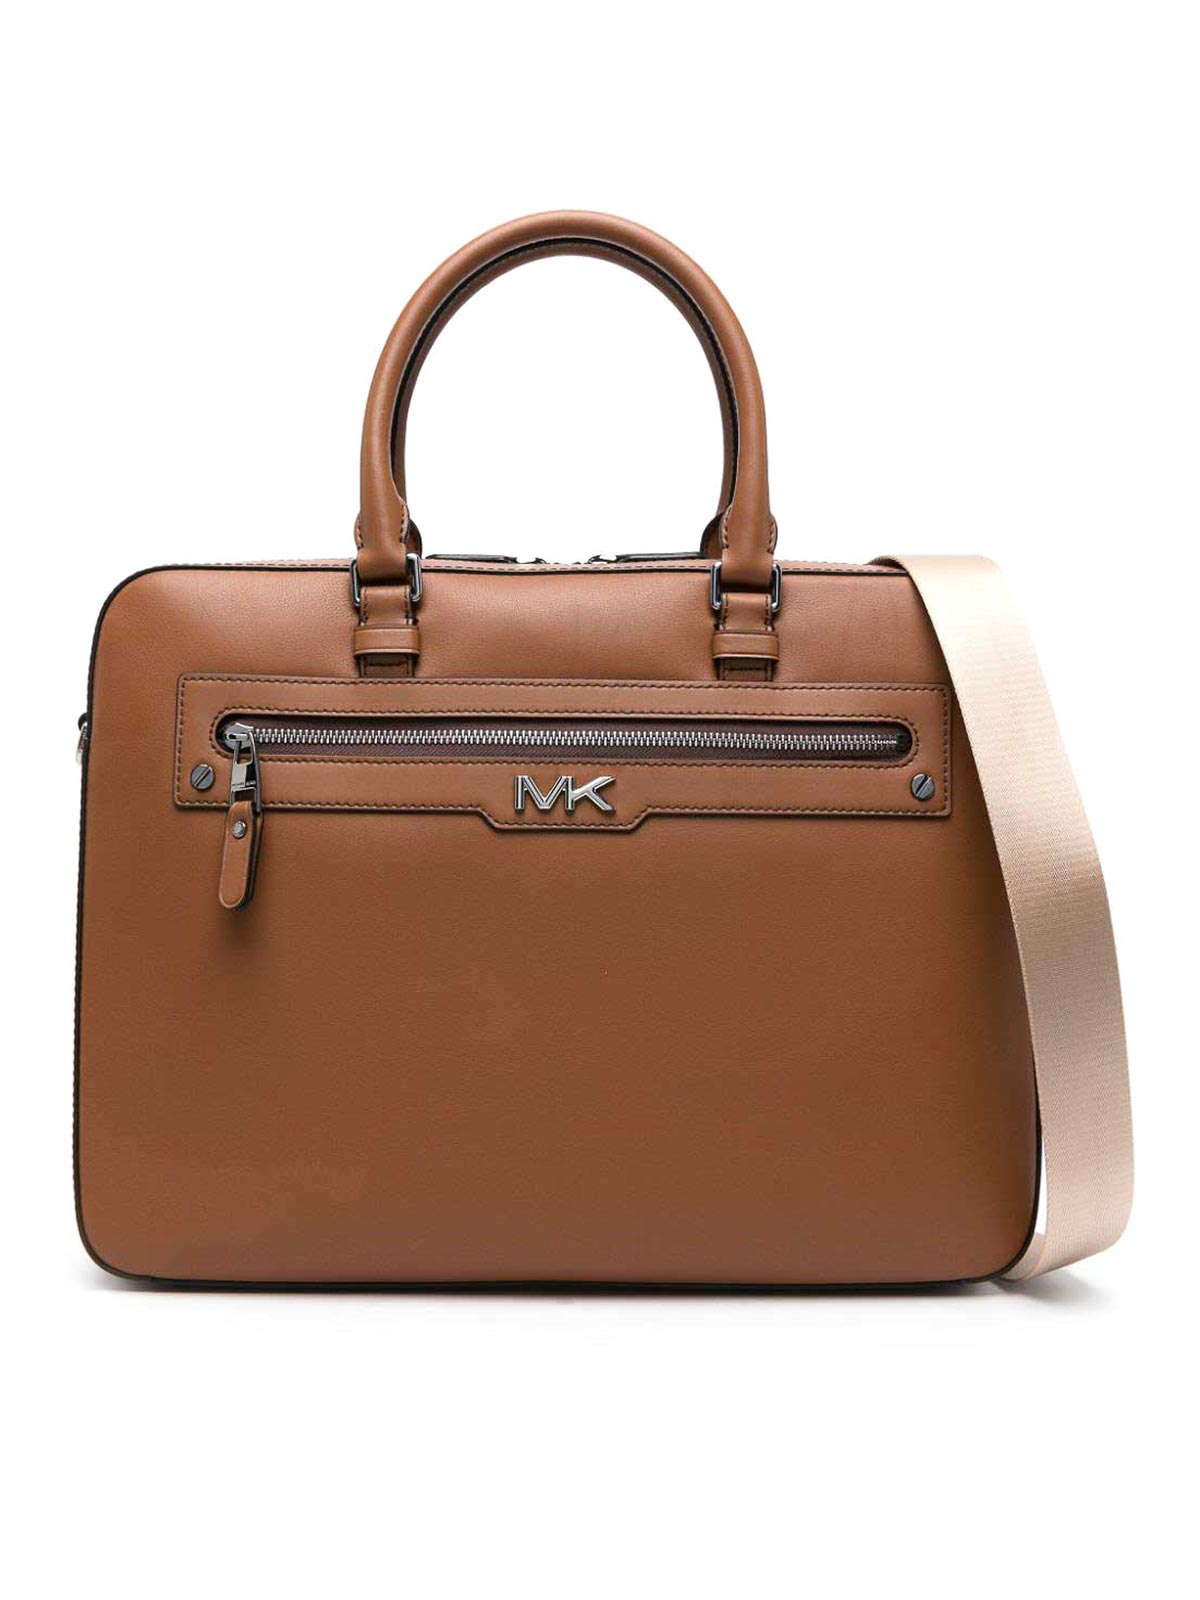 How to put my Michael Kors Handbag through the business...